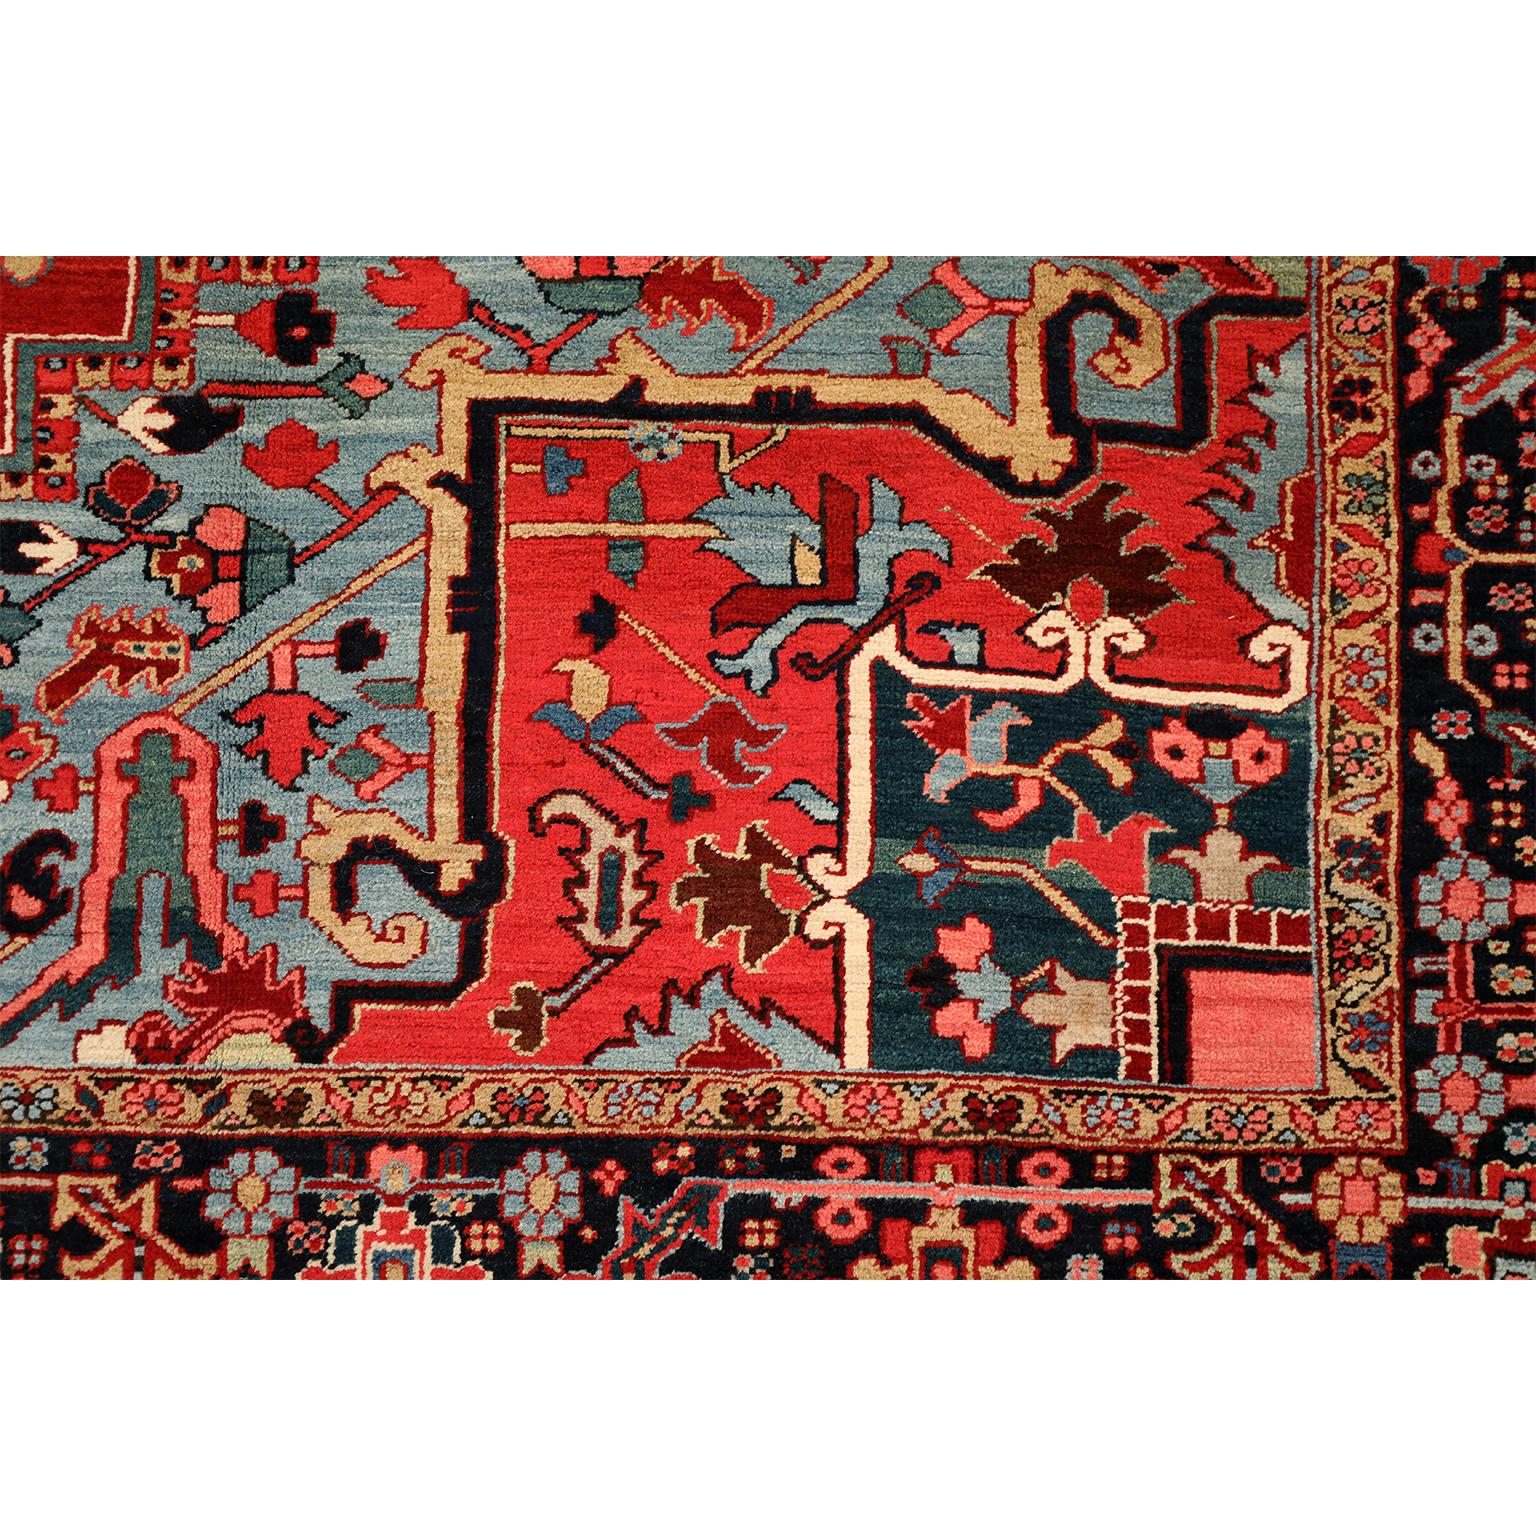 Wool Antique Heriz Persian Rug, Red Medallion, 13’ x 17’